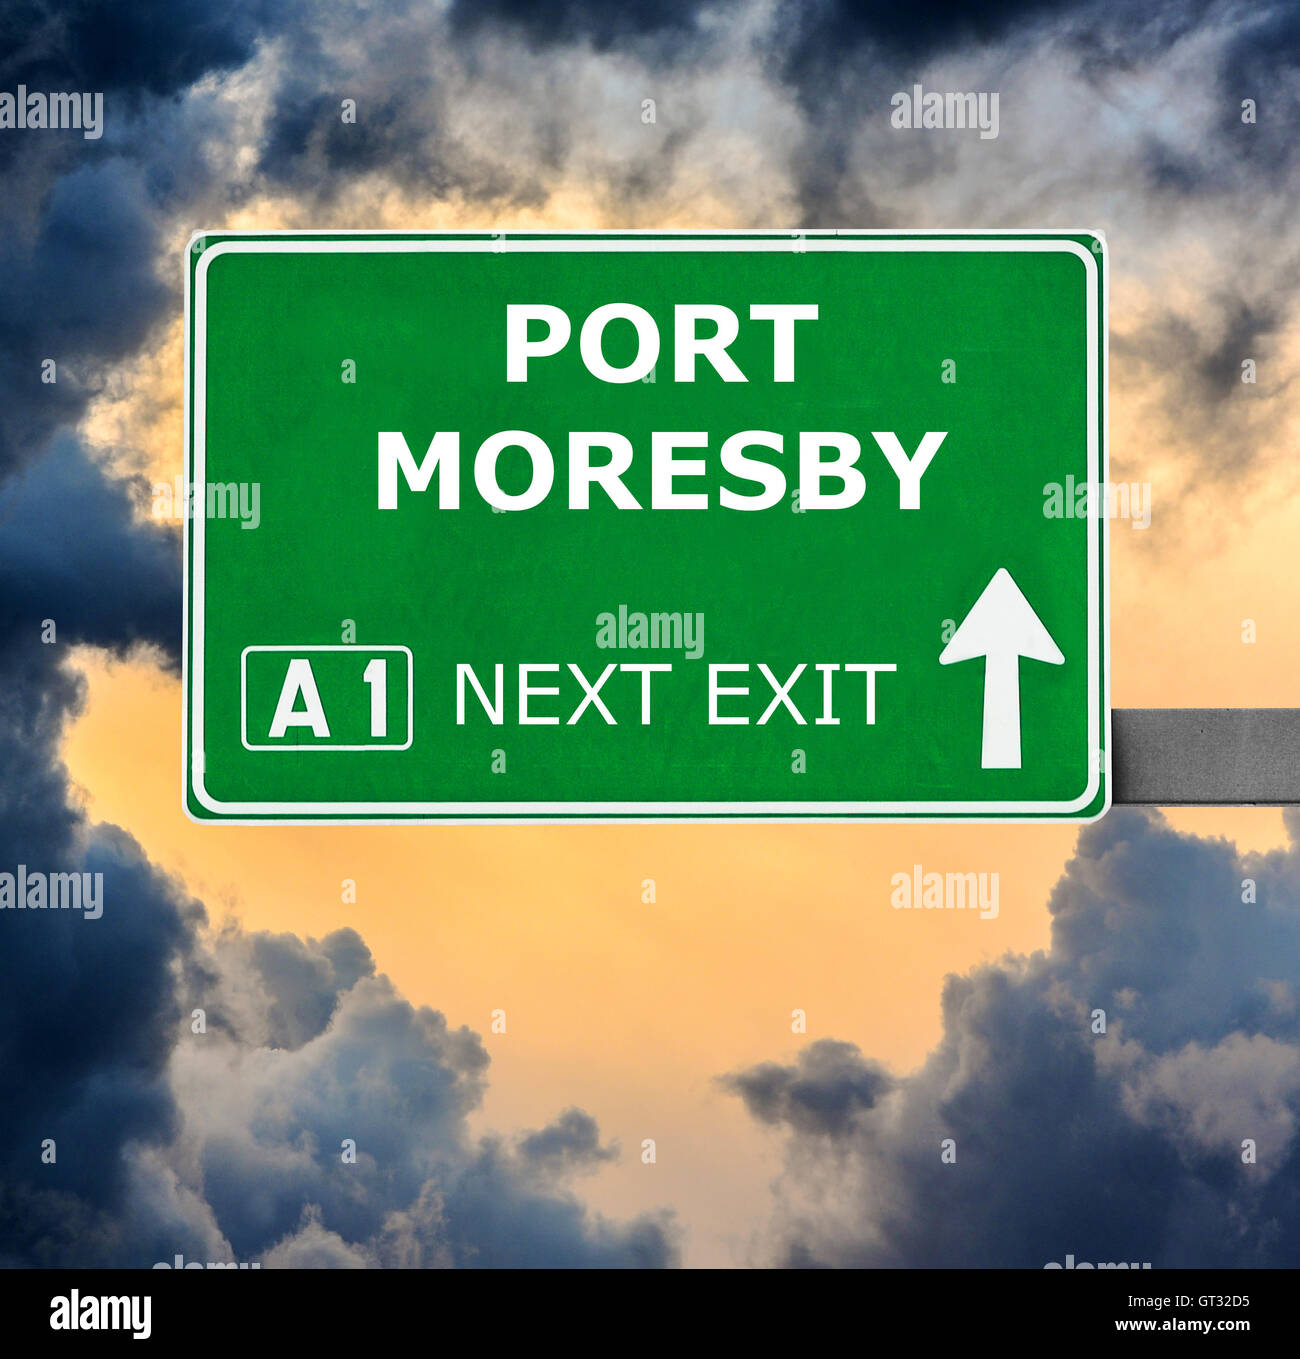 PORT MORESBY Straßenschild gegen klar blauen Himmel Stockfoto